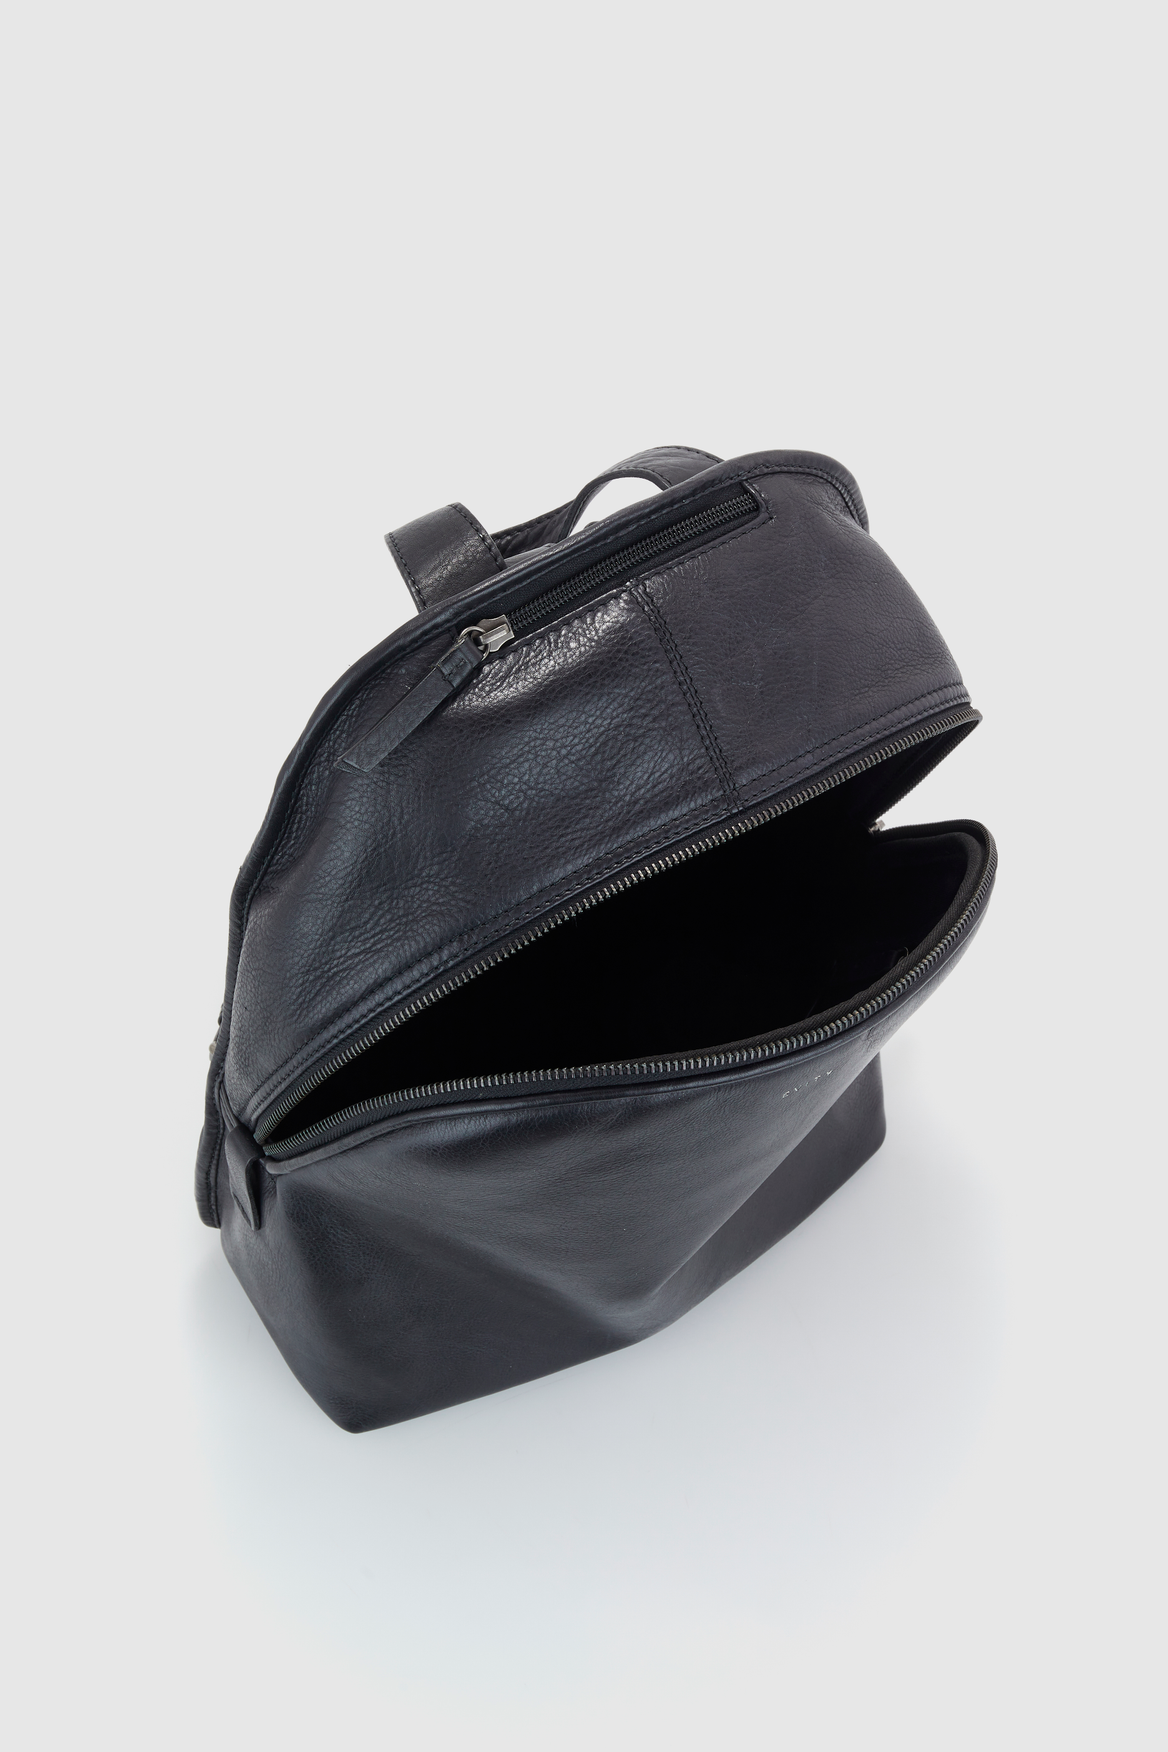 Evity Maya Leather Tablet Backpack – Strandbags Australia